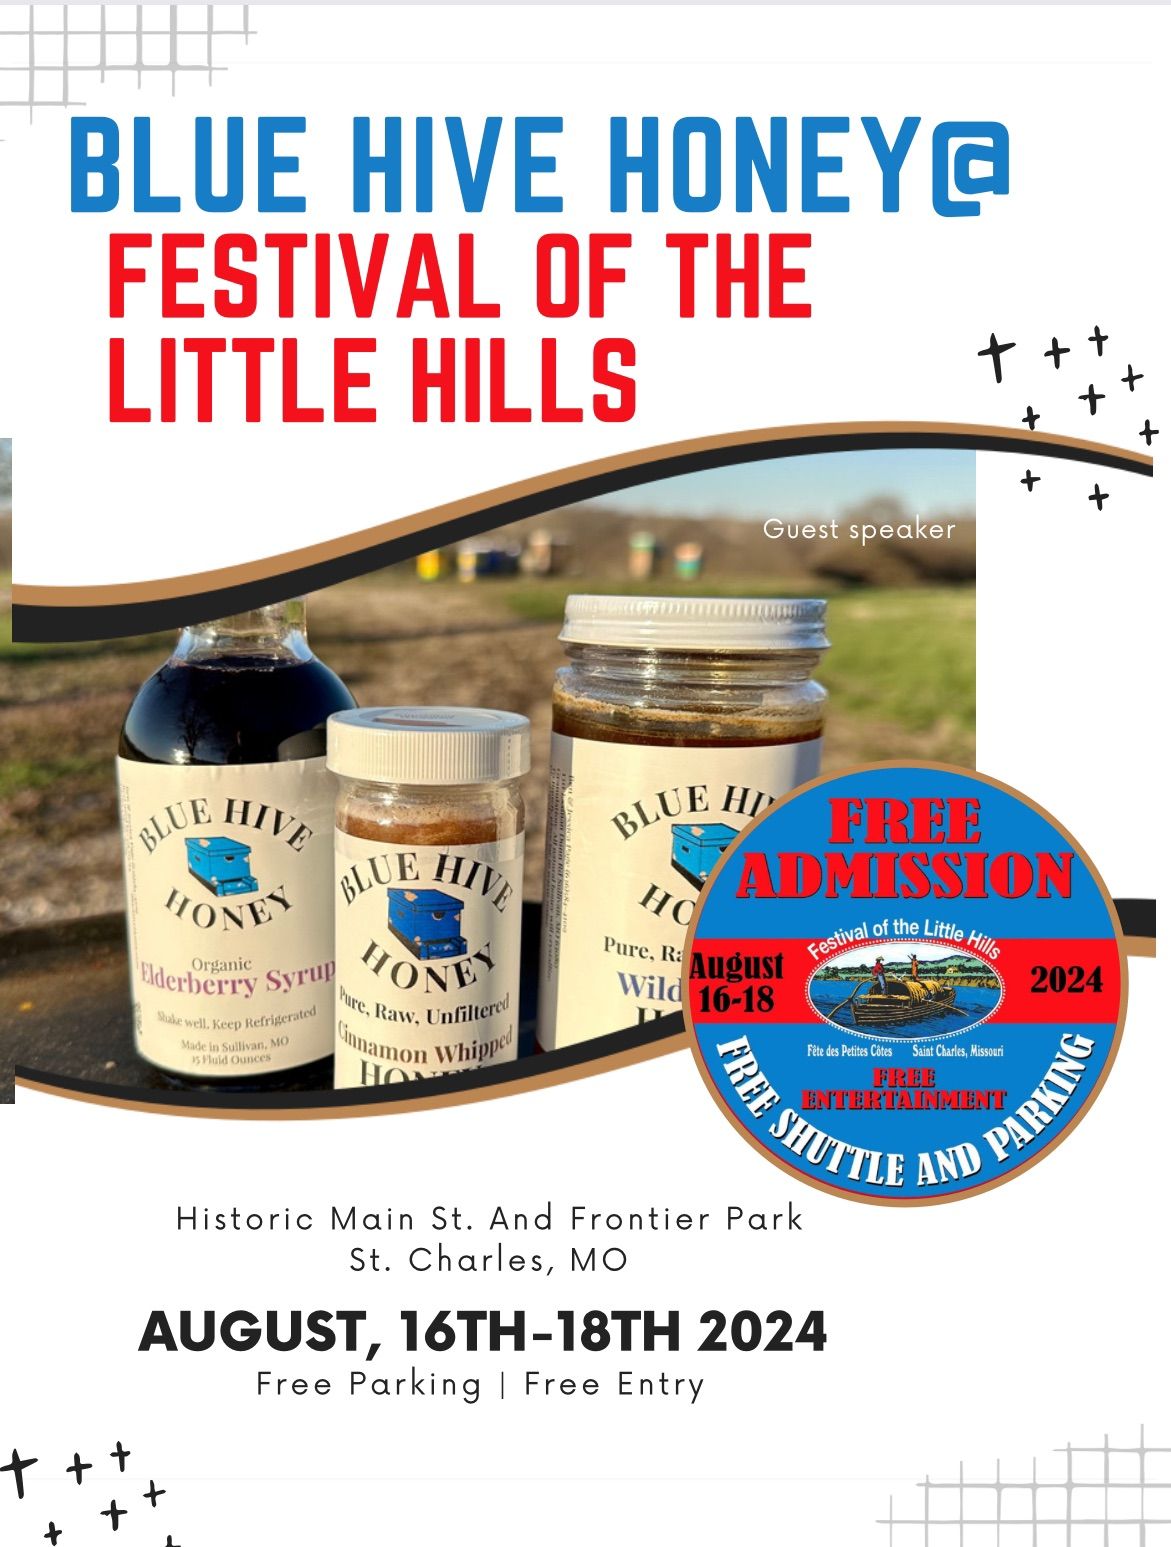 Blue Hive Honey @ Festival of the Little Hills